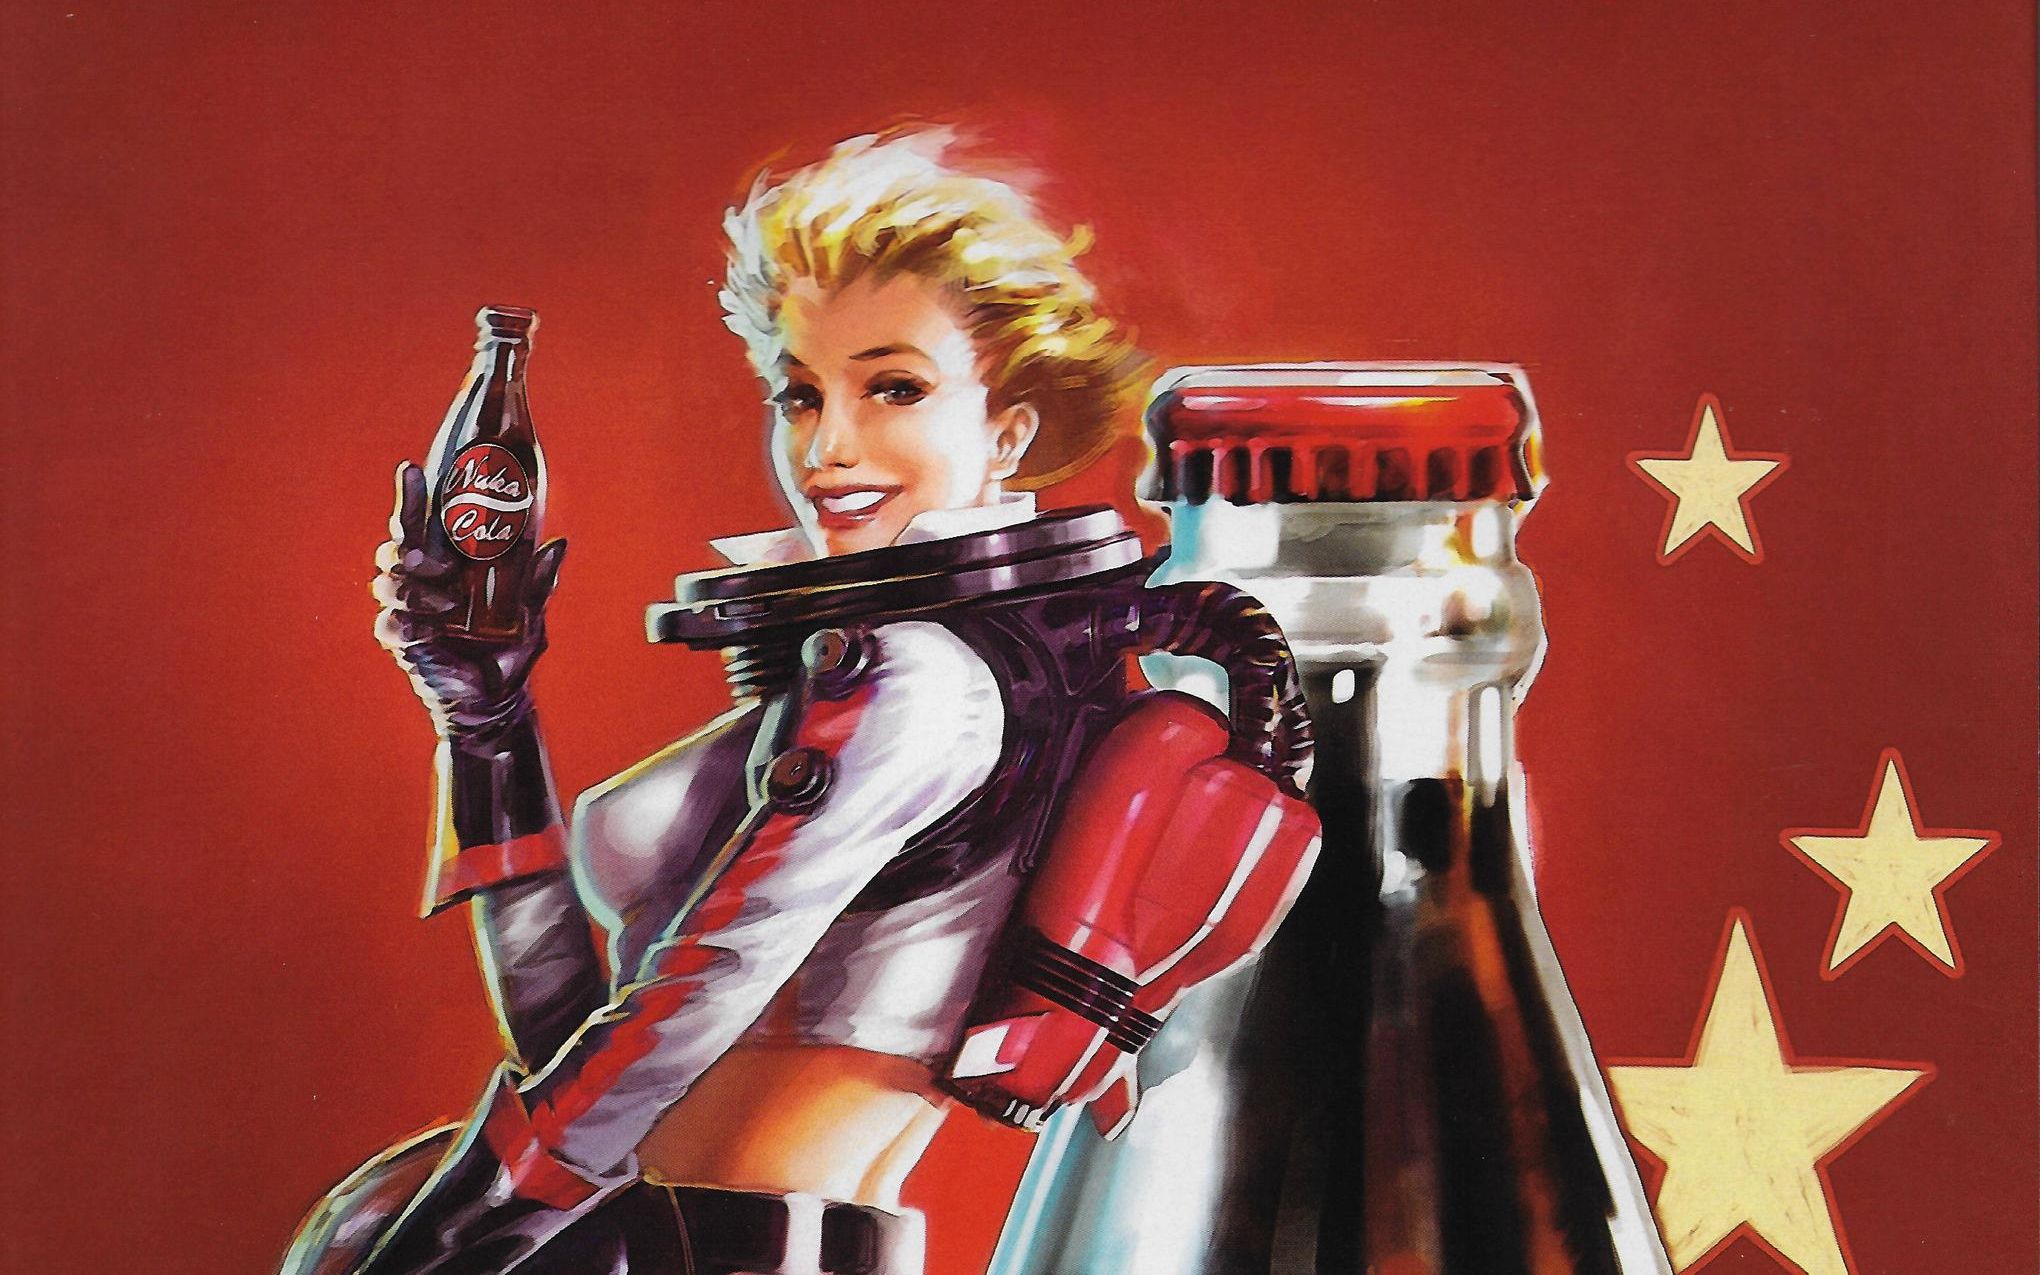 nuka cola, video game, fallout